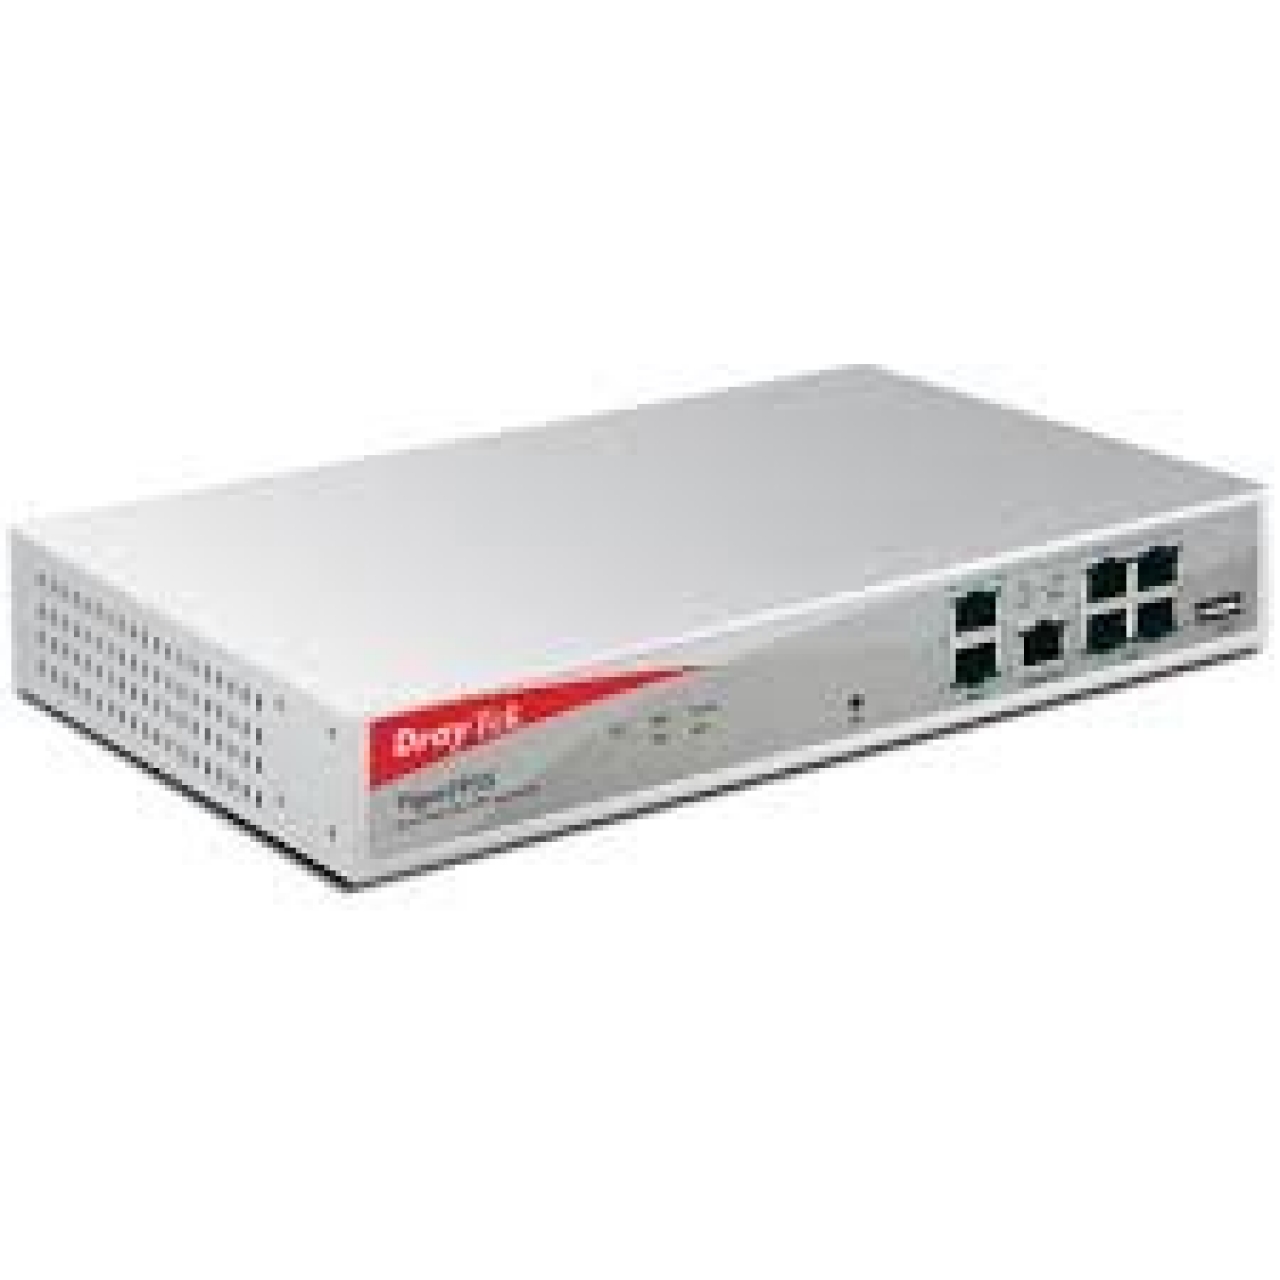 DRAYTEK Vigor 2955 Dual WAN Broadband High Performance VPN Router